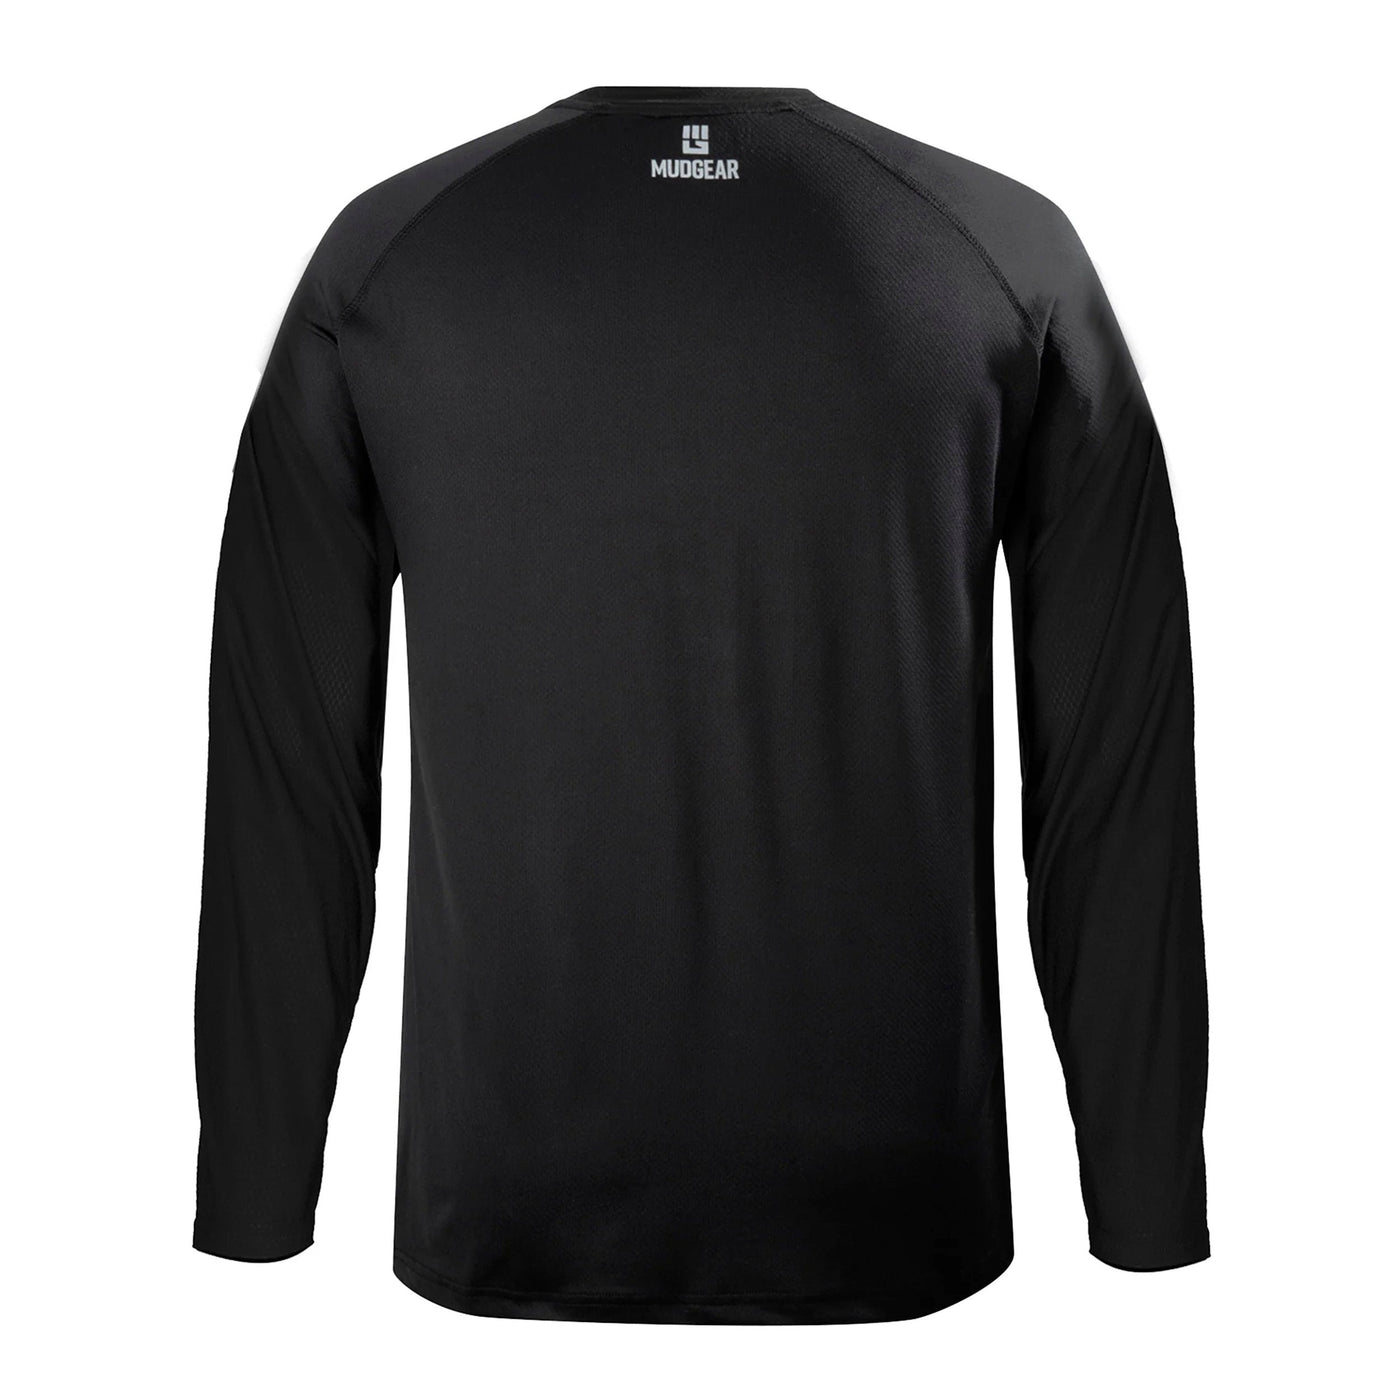 MudGear Men's Loose Fit Performance Shirt VX - Long Sleeve (Black)